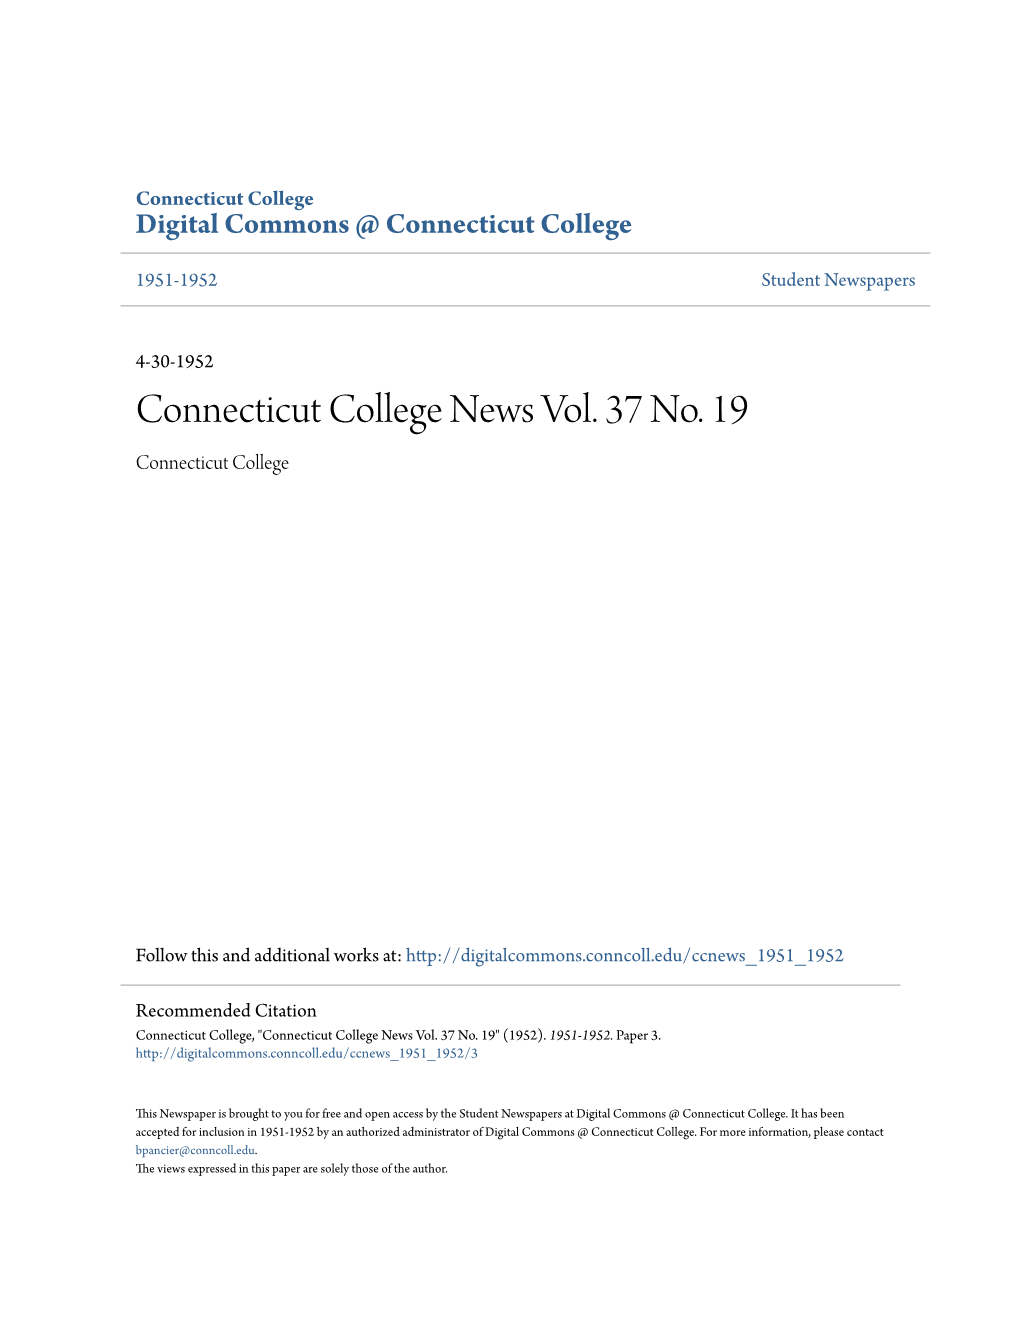 Connecticut College News Vol. 37 No. 19 Connecticut College